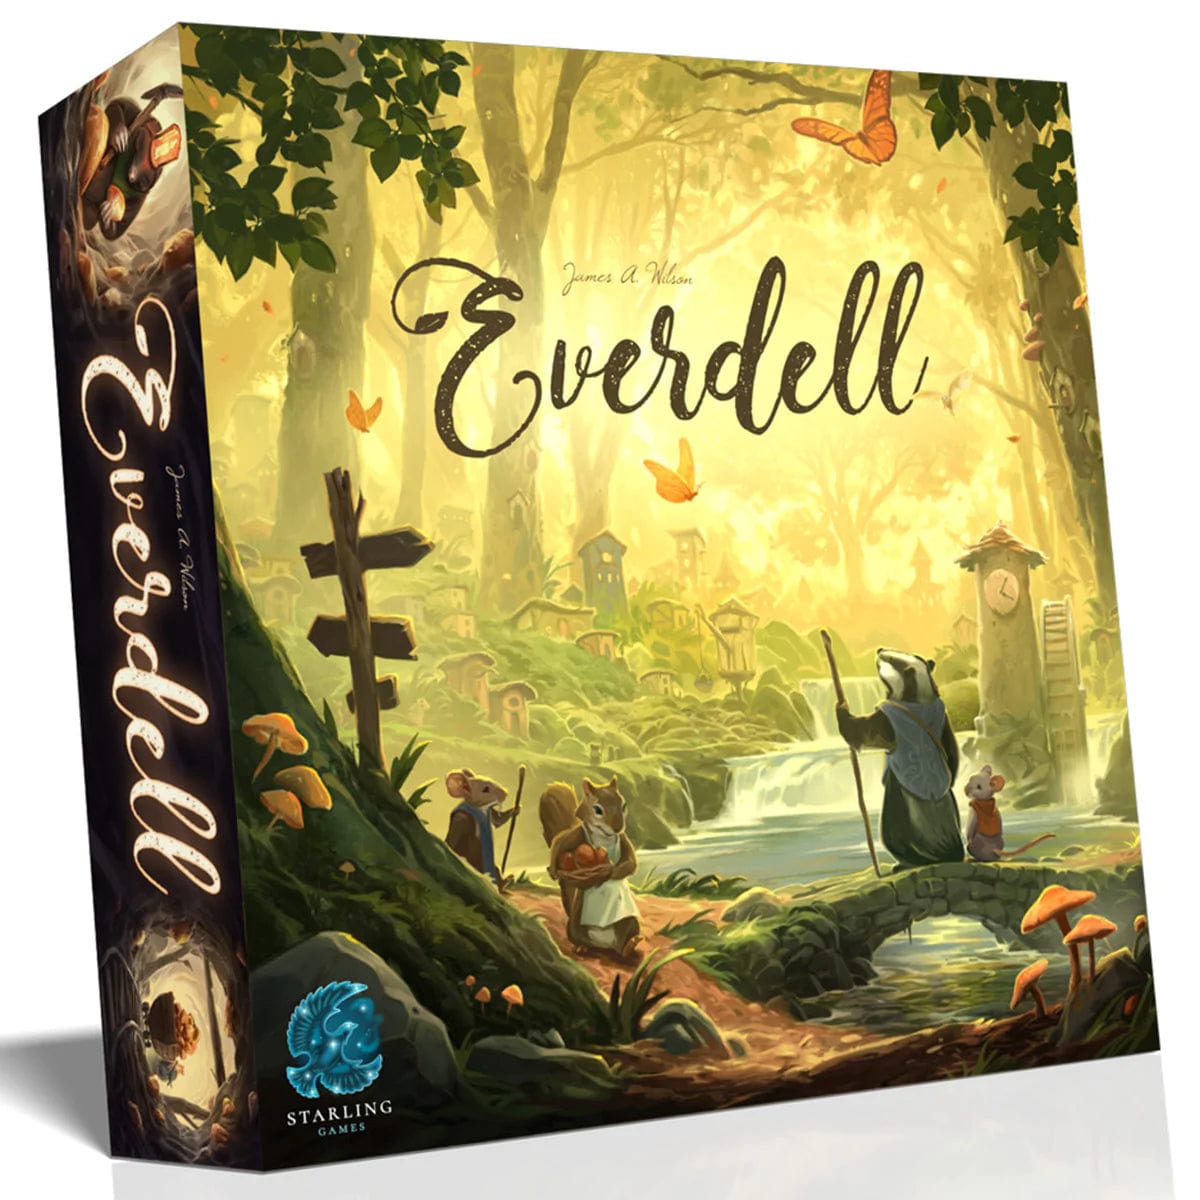 Everdell: Third Edition - Third Eye